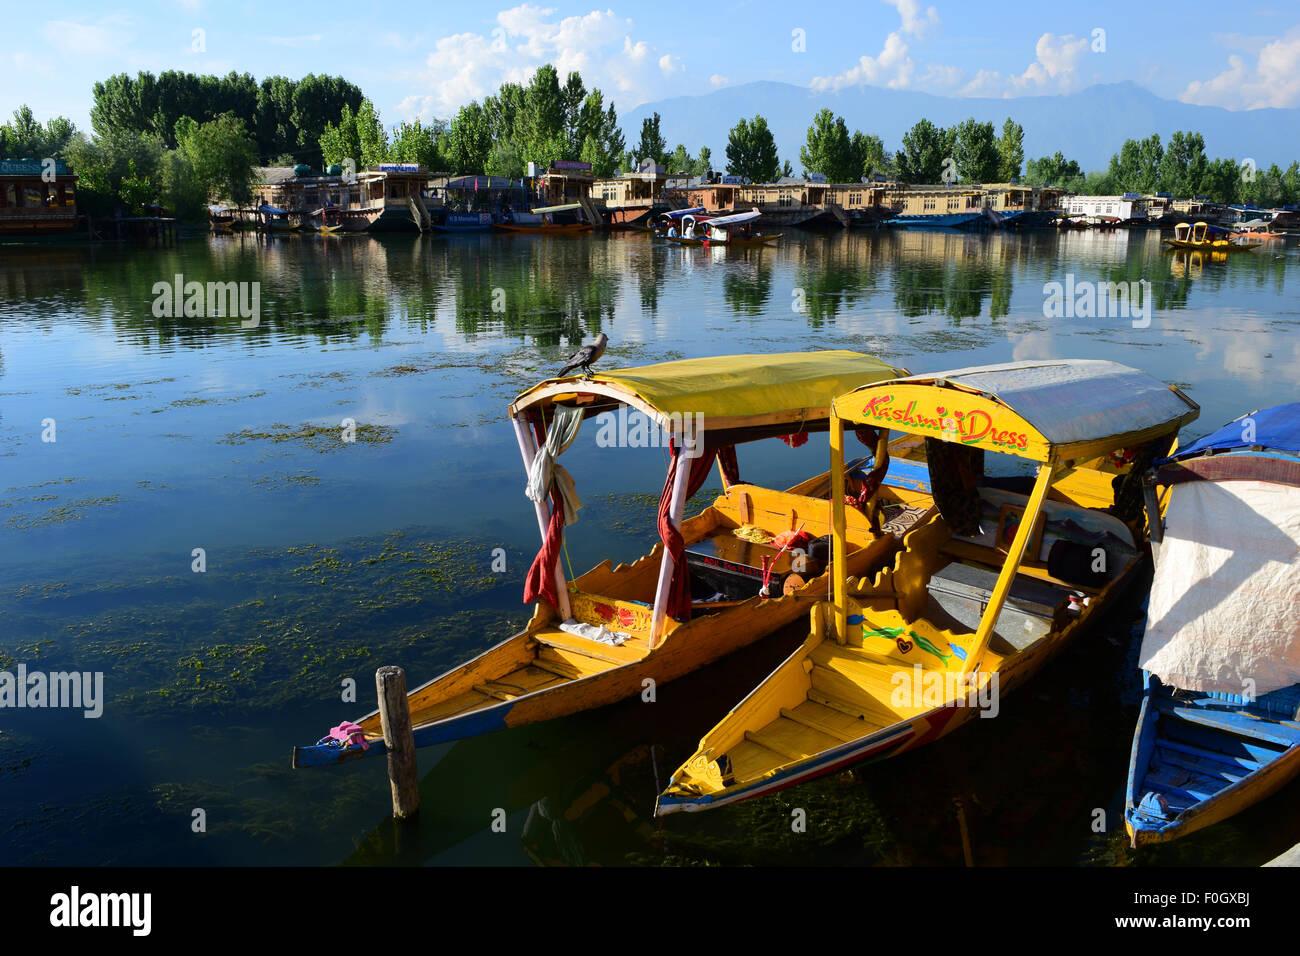 Dal lake and shikara Boats in Beautiful Kashmir Valley at Srinagar Jammu and Kashmir India Stock Photo